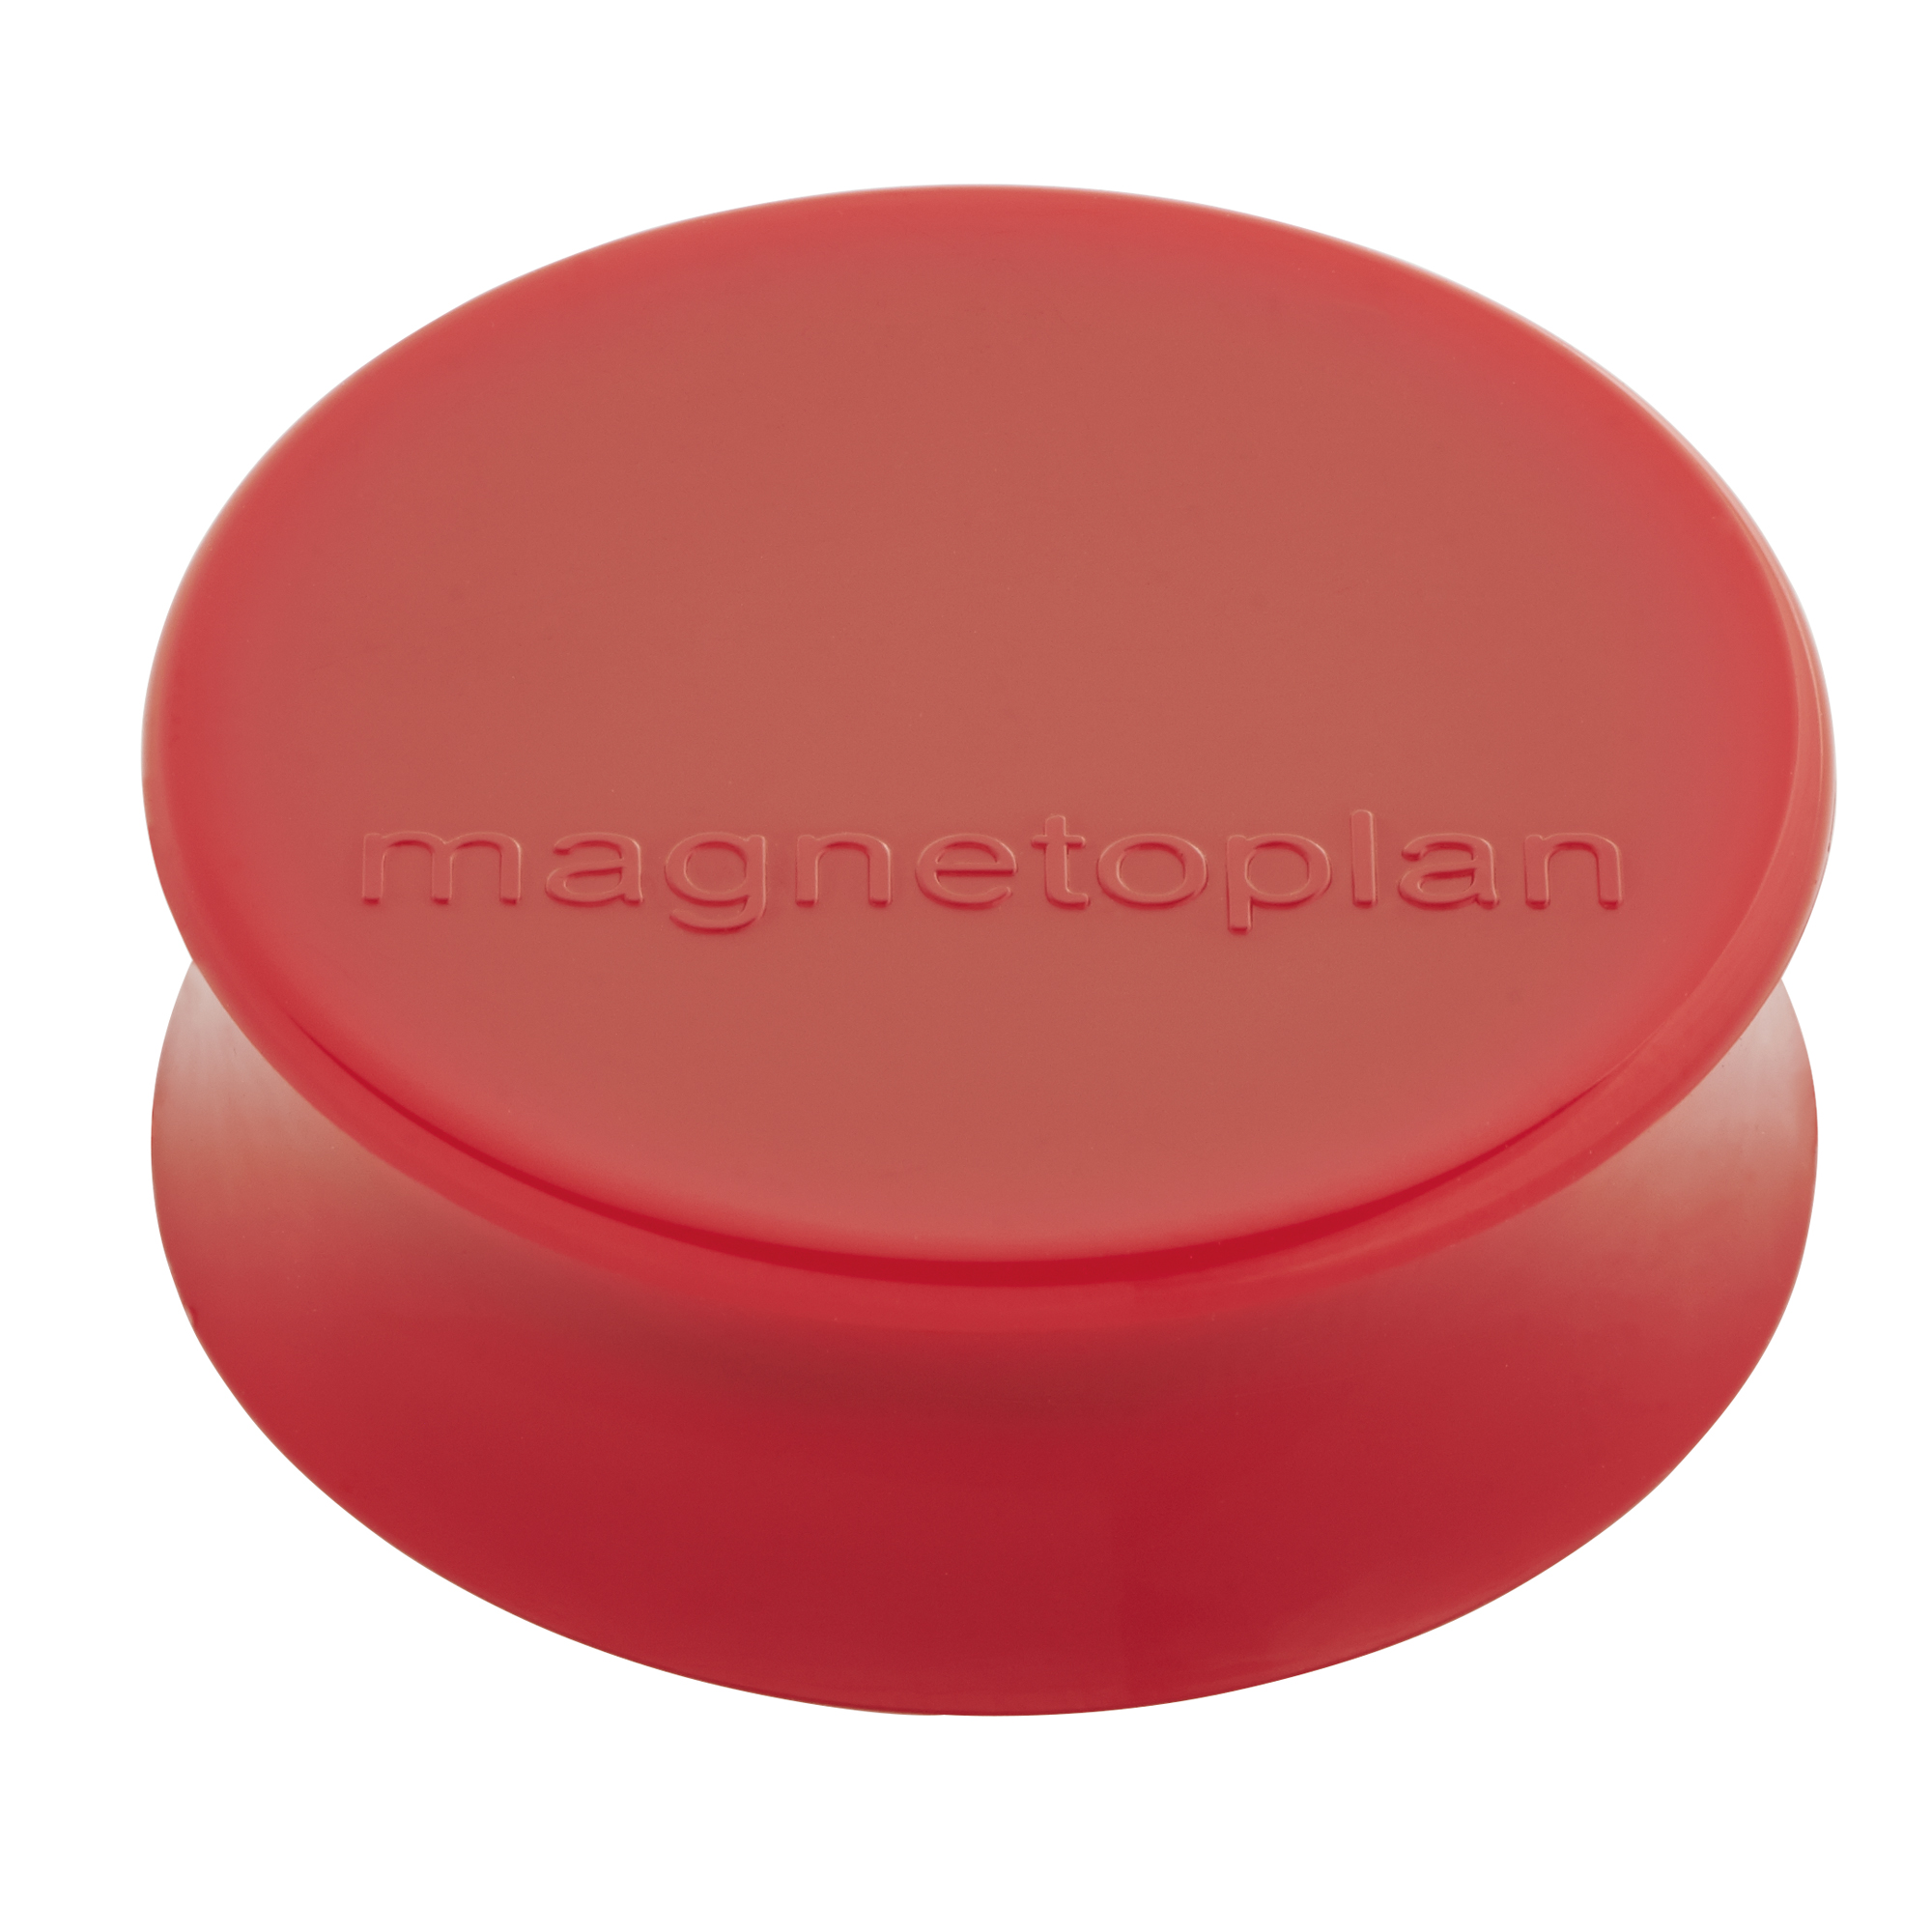 magnetoplan® Magnet Ergo Large rot